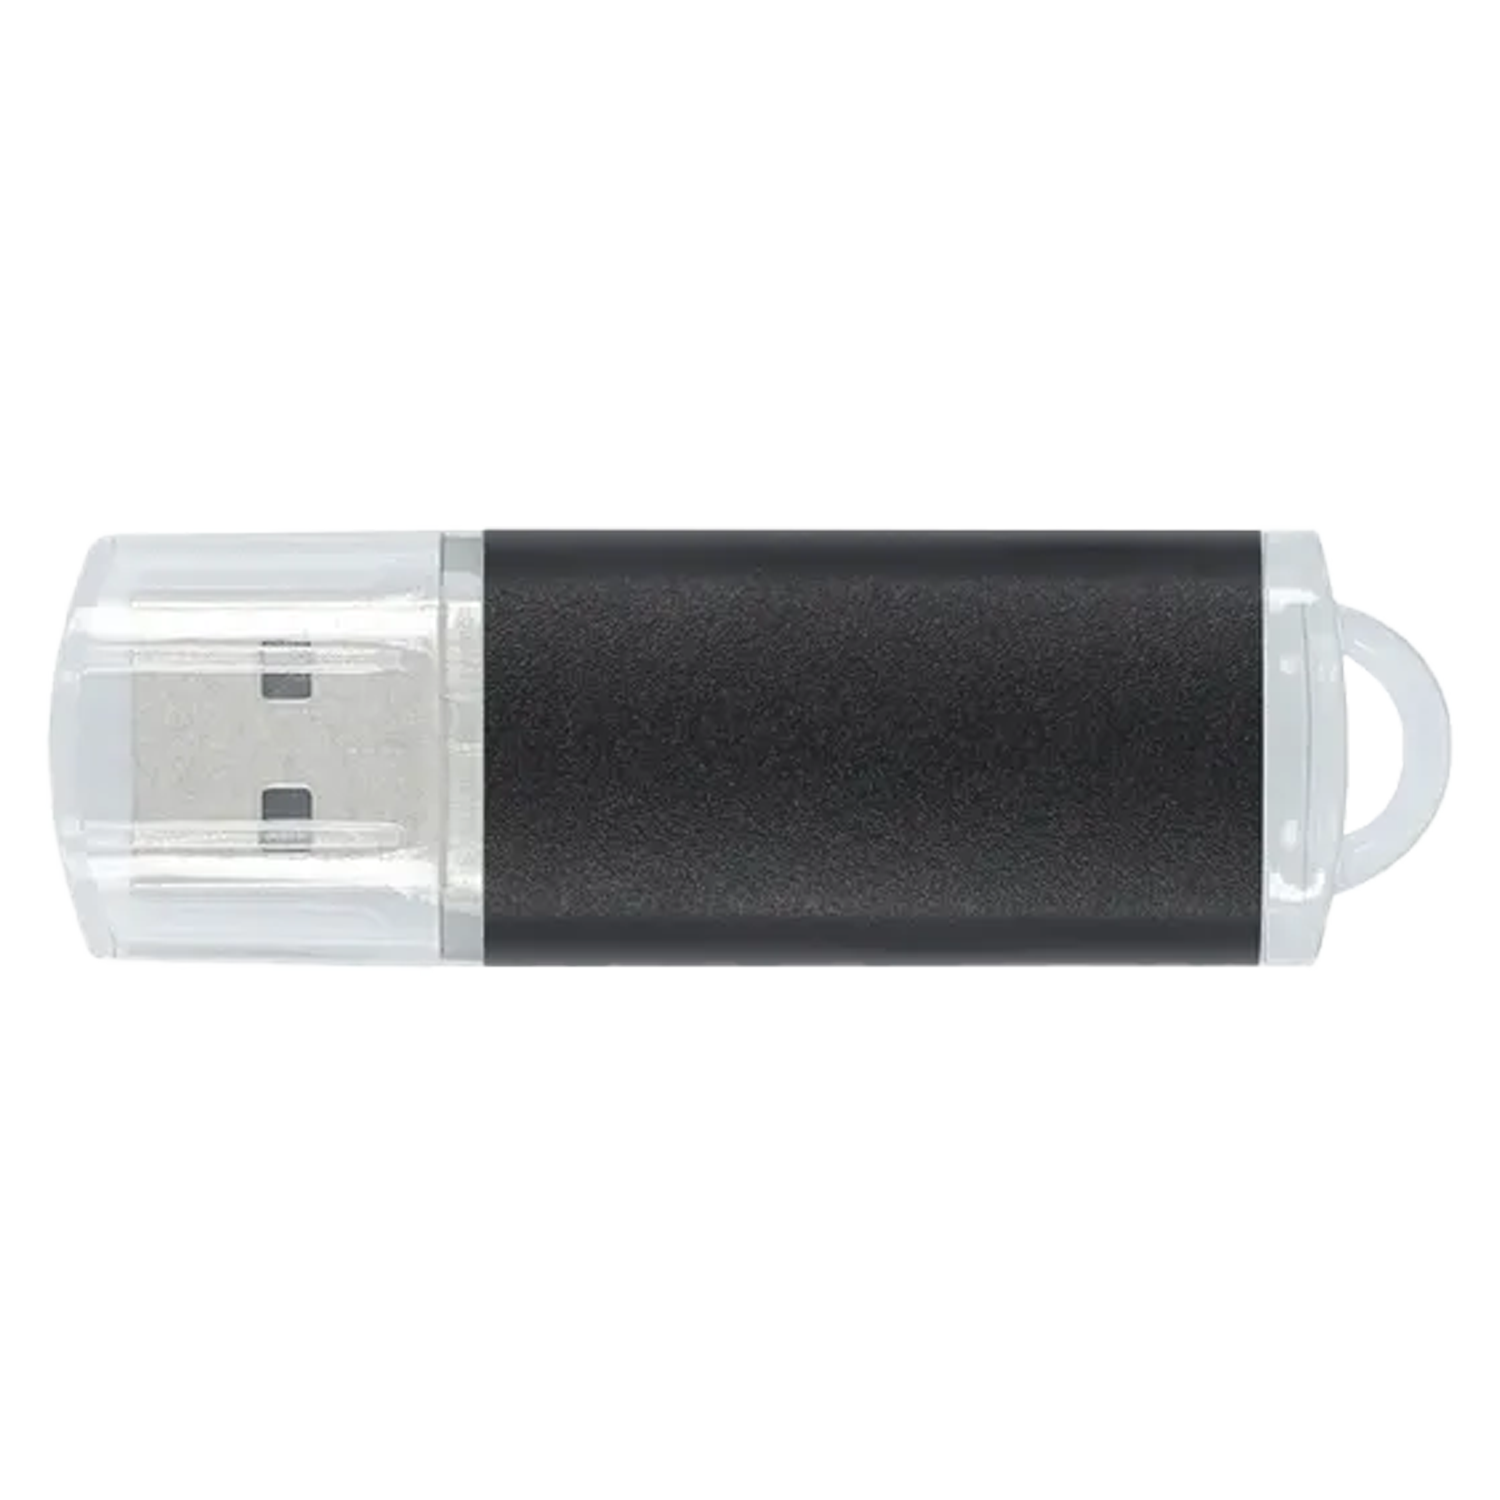 Receptor Azamerica UP USB Stick (Pendrive Magic)